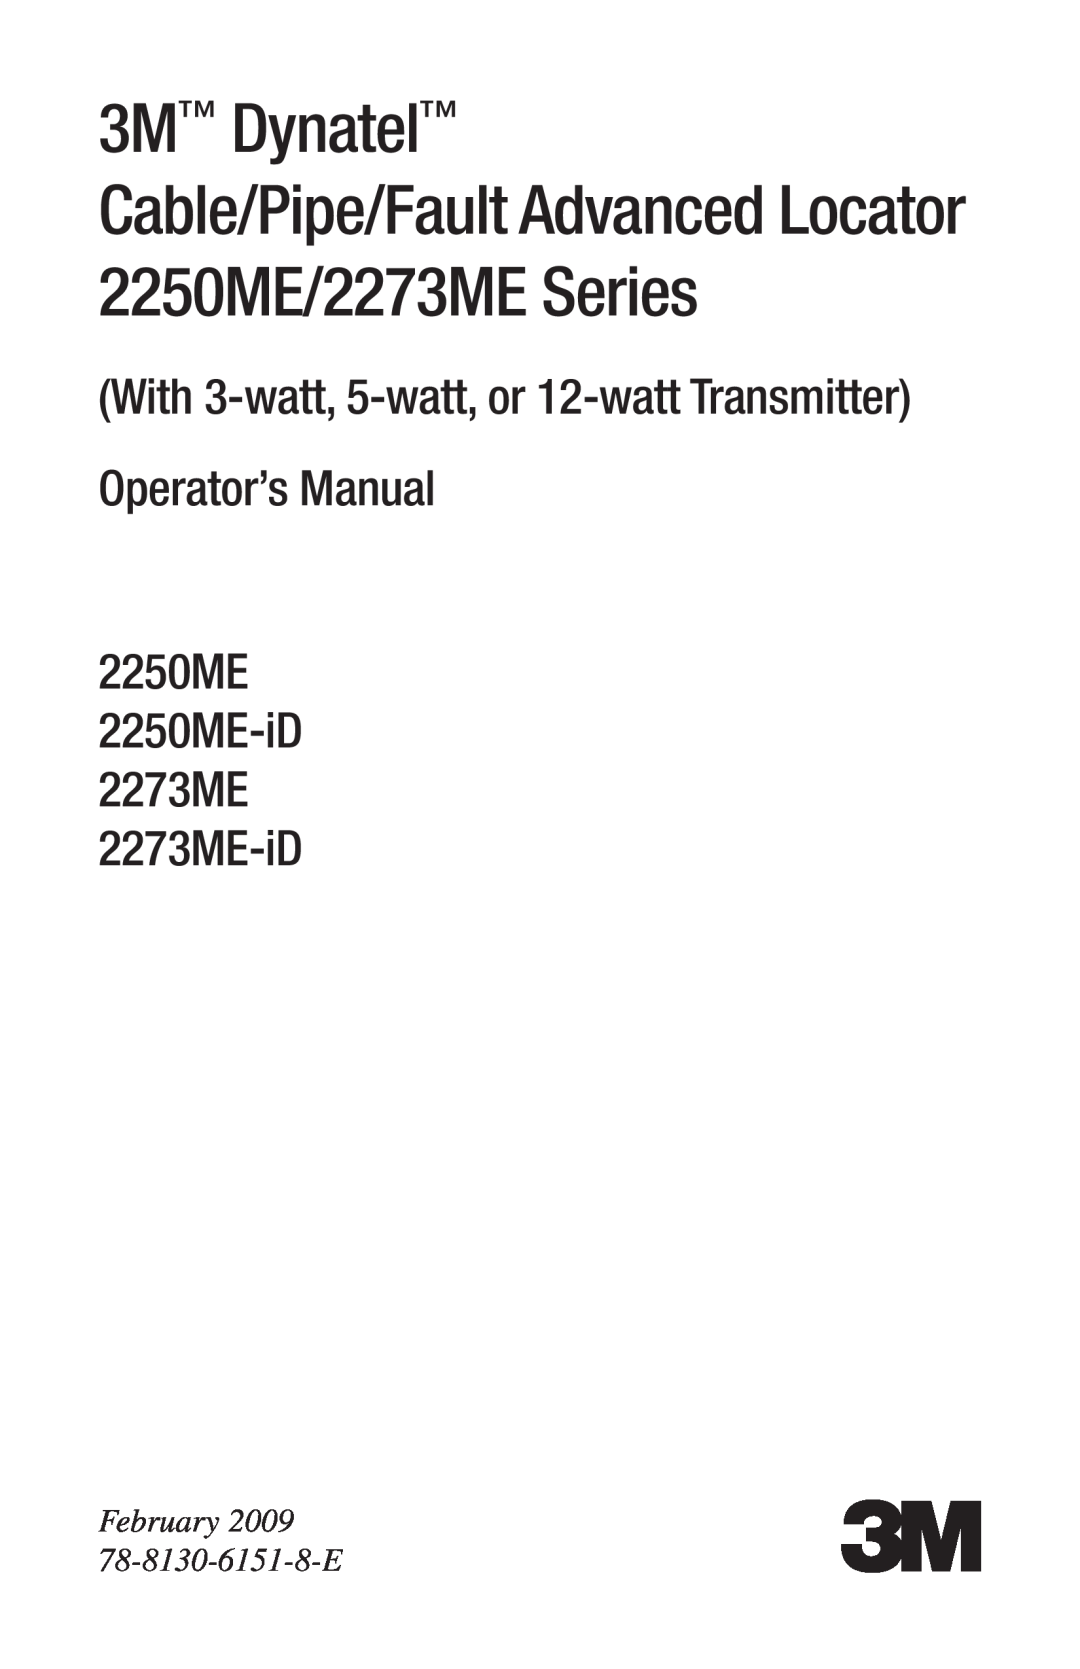 3M manual 3M Dynatel, 2250ME 2250ME-iD2273ME 2273ME-iD, February, 78-8130-6151-8-E 